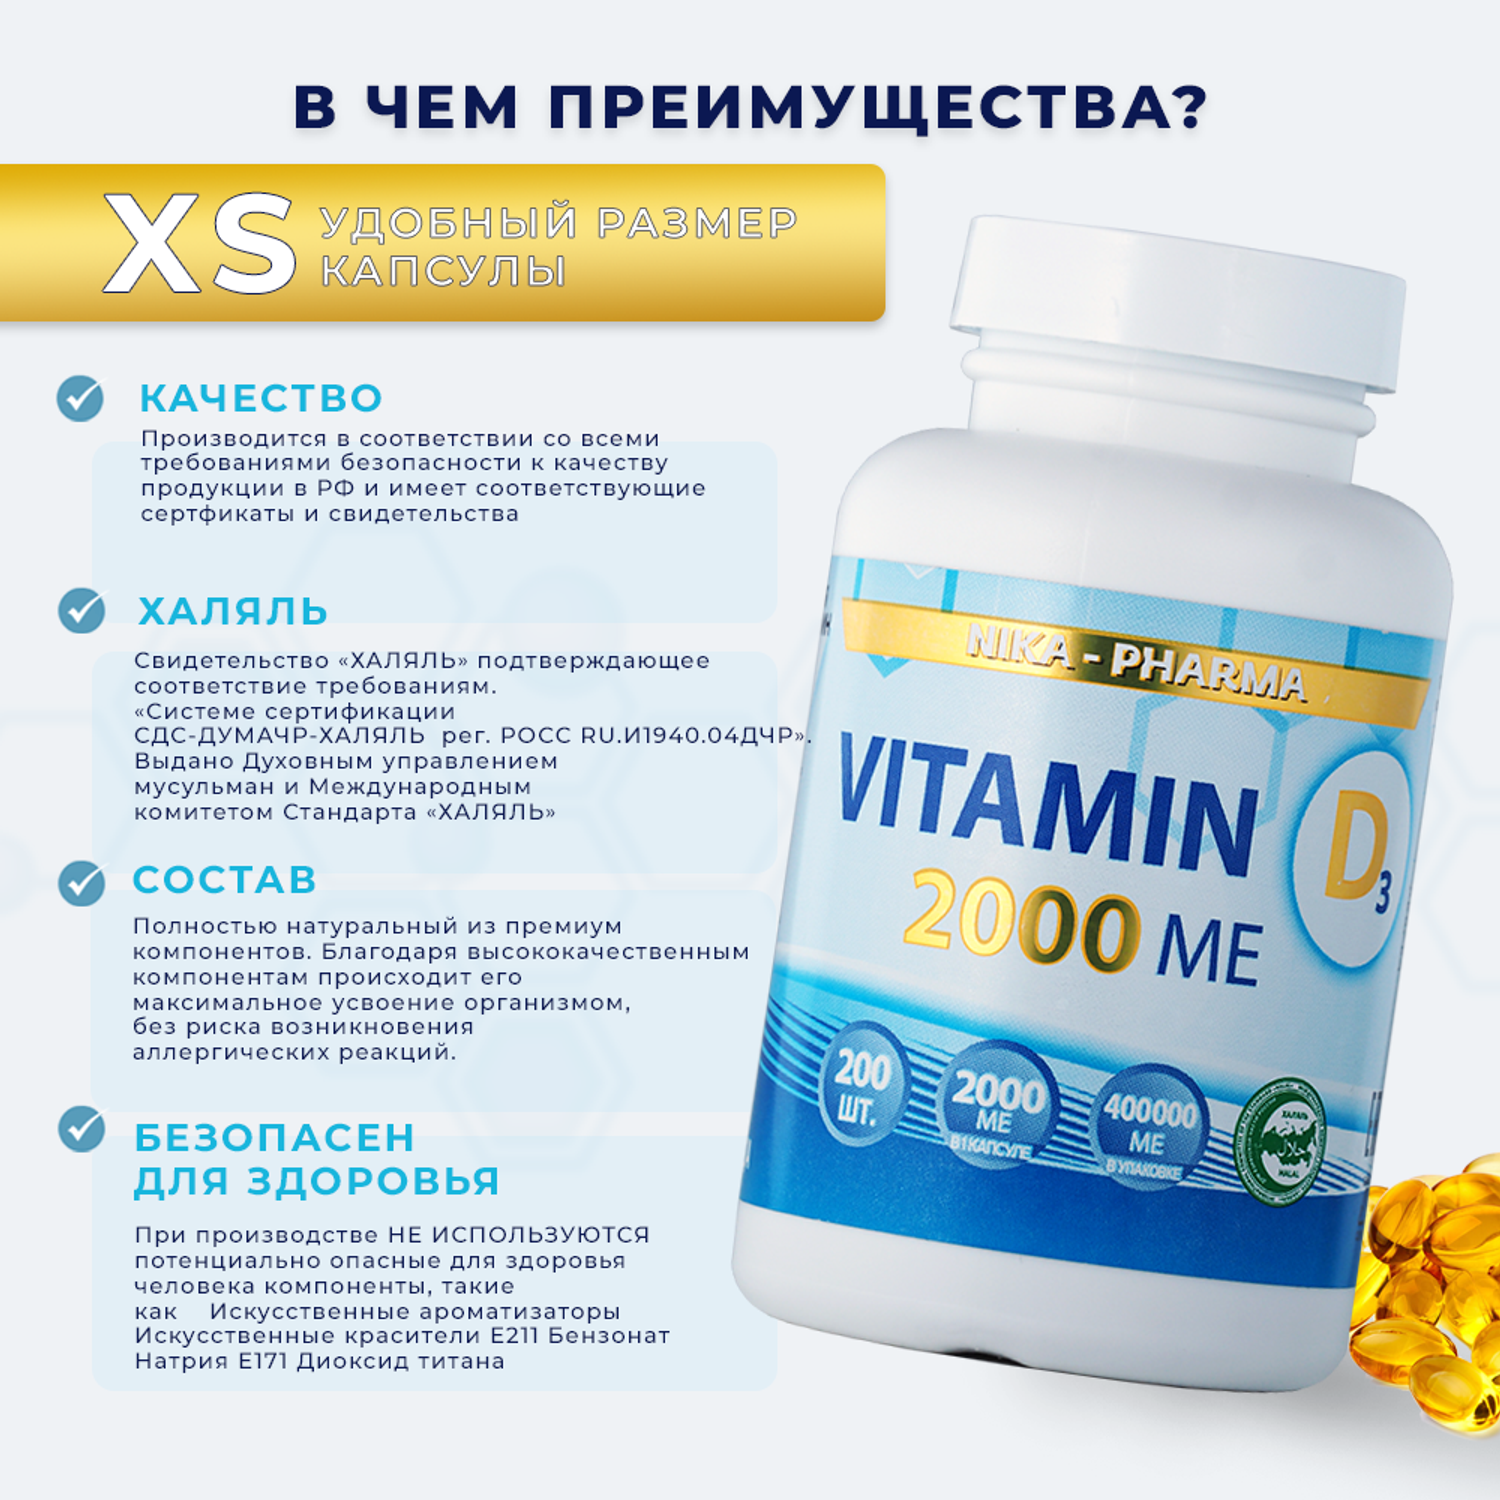 Витамин Д3 NIKA-PHARMA 2000 МЕ 200 капсул Халяль 400 000 МЕ в упаковке - фото 5